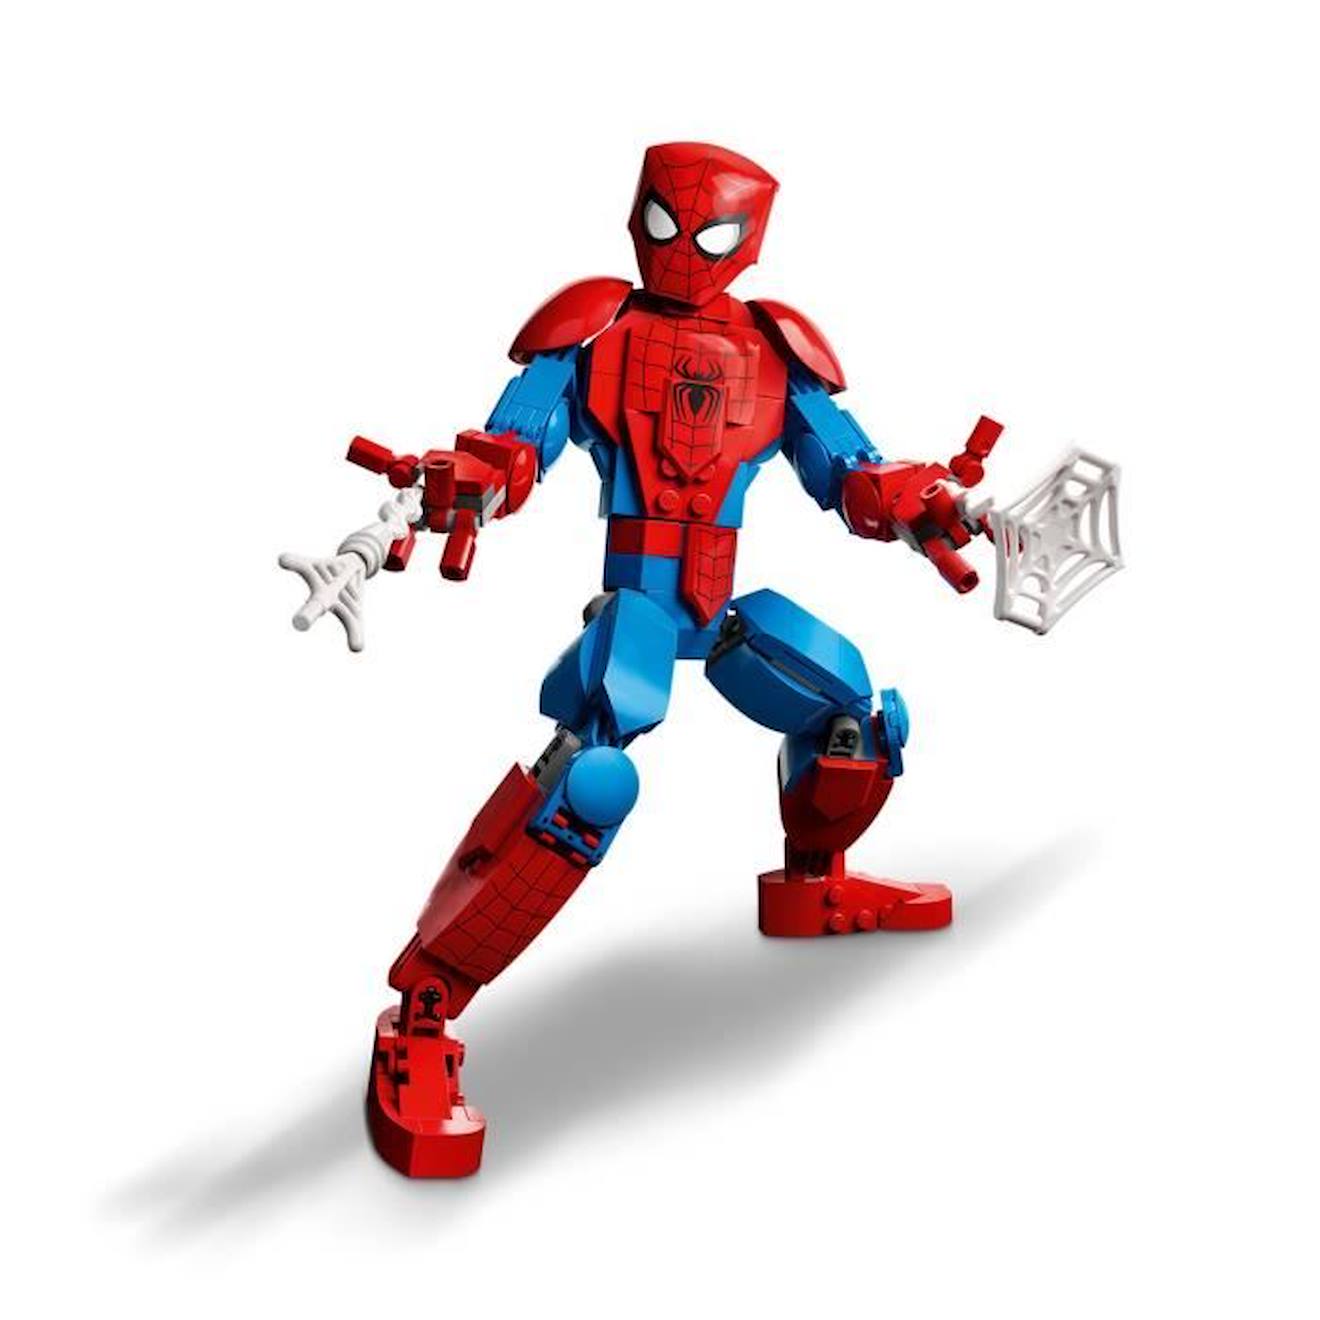 https://media.vertbaudet.fr/Pictures/vertbaudet/322684/lego-marvel-76226-la-figurine-de-spider-man-jouet-a-construire-super-heros-cadeau-8-ans.jpg